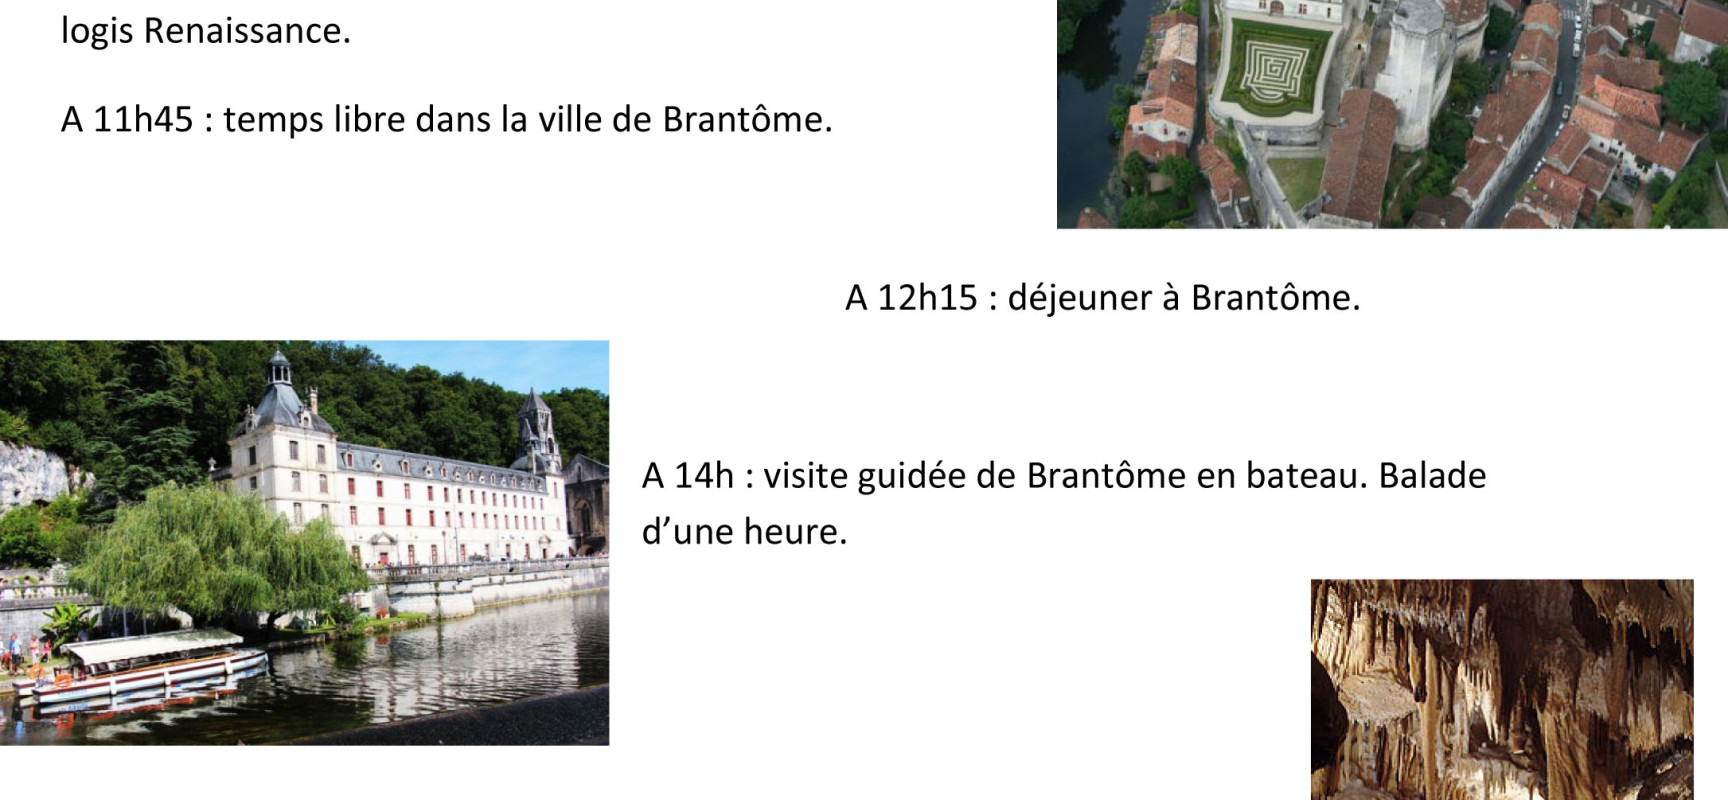 Voyage à Brantôme en Périgord